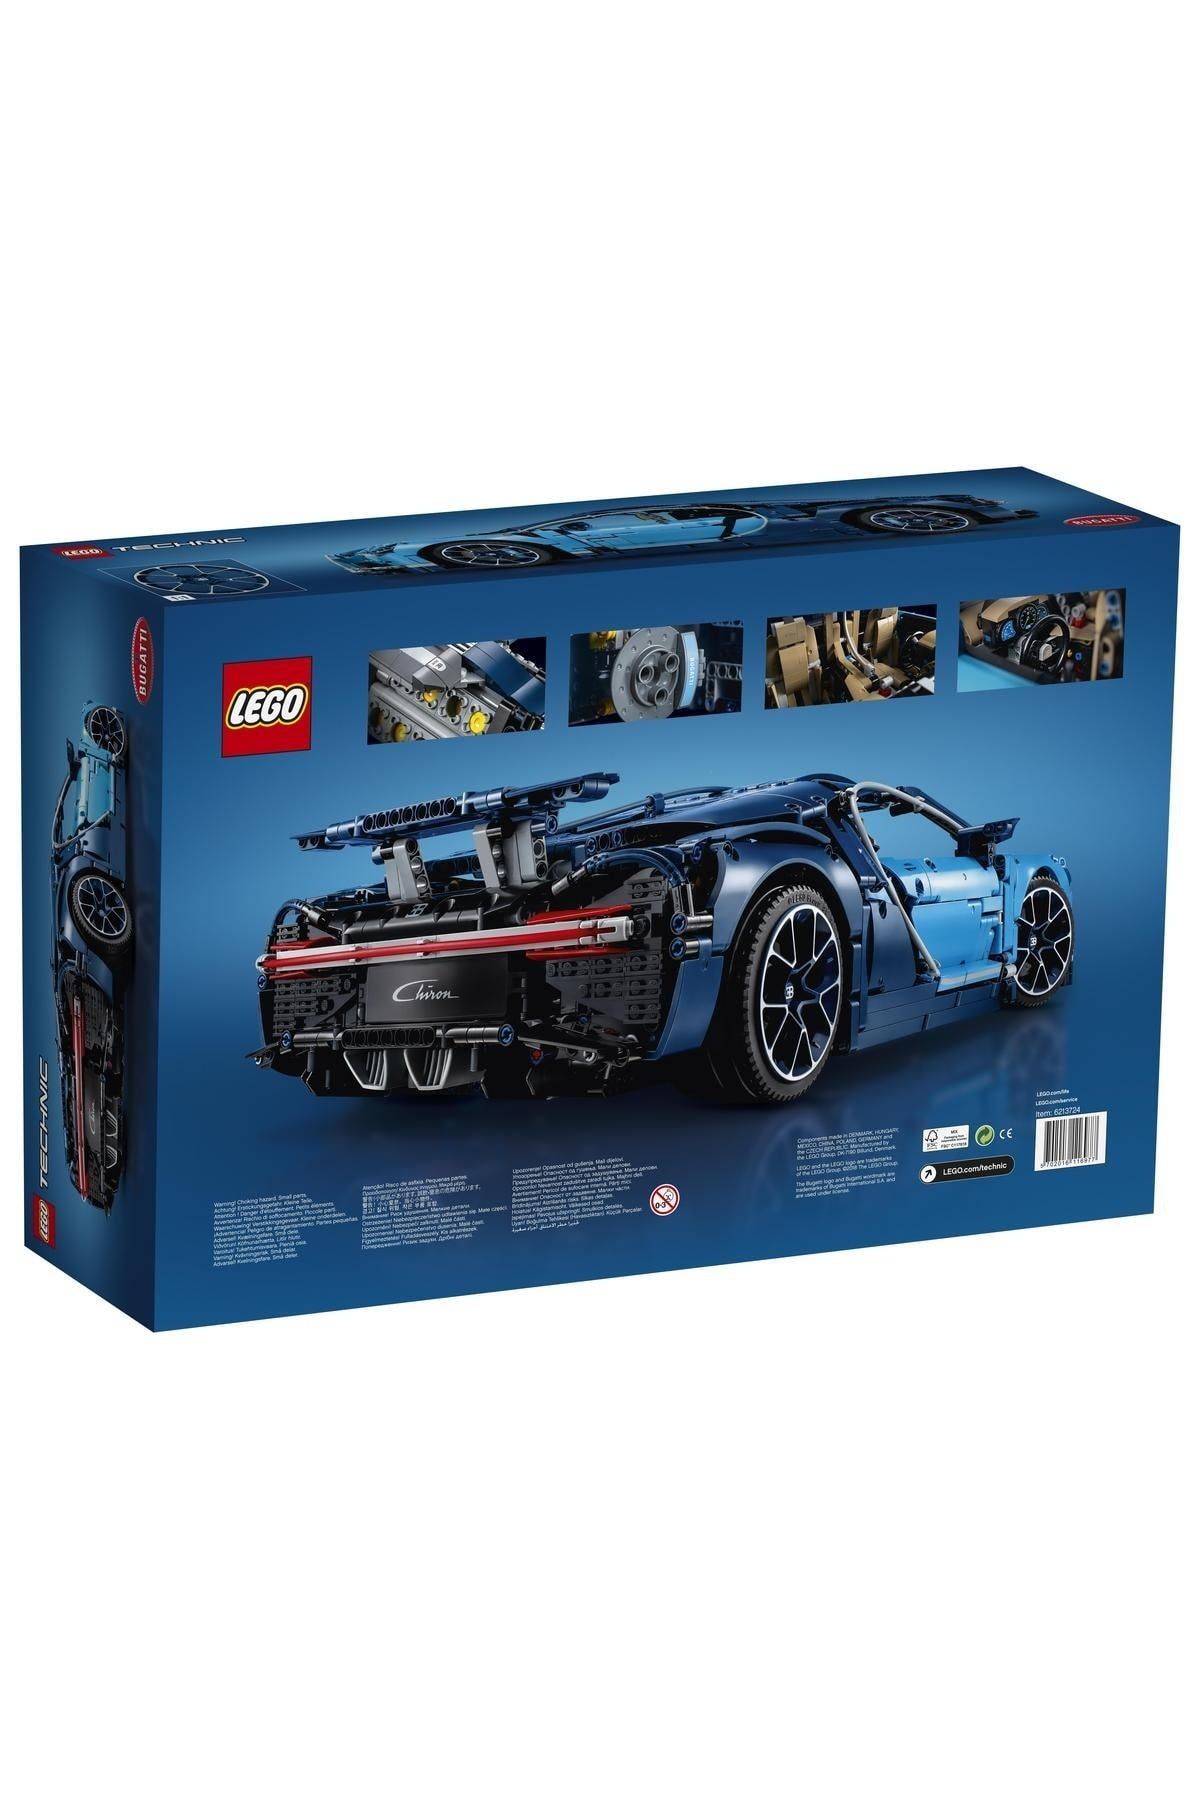 LEGO لگو ست ساختمان ماشین مسابقه ای بوگاتی چیرون Technic مدل ماشین اسپرت کلکسیونی 3599 عدد